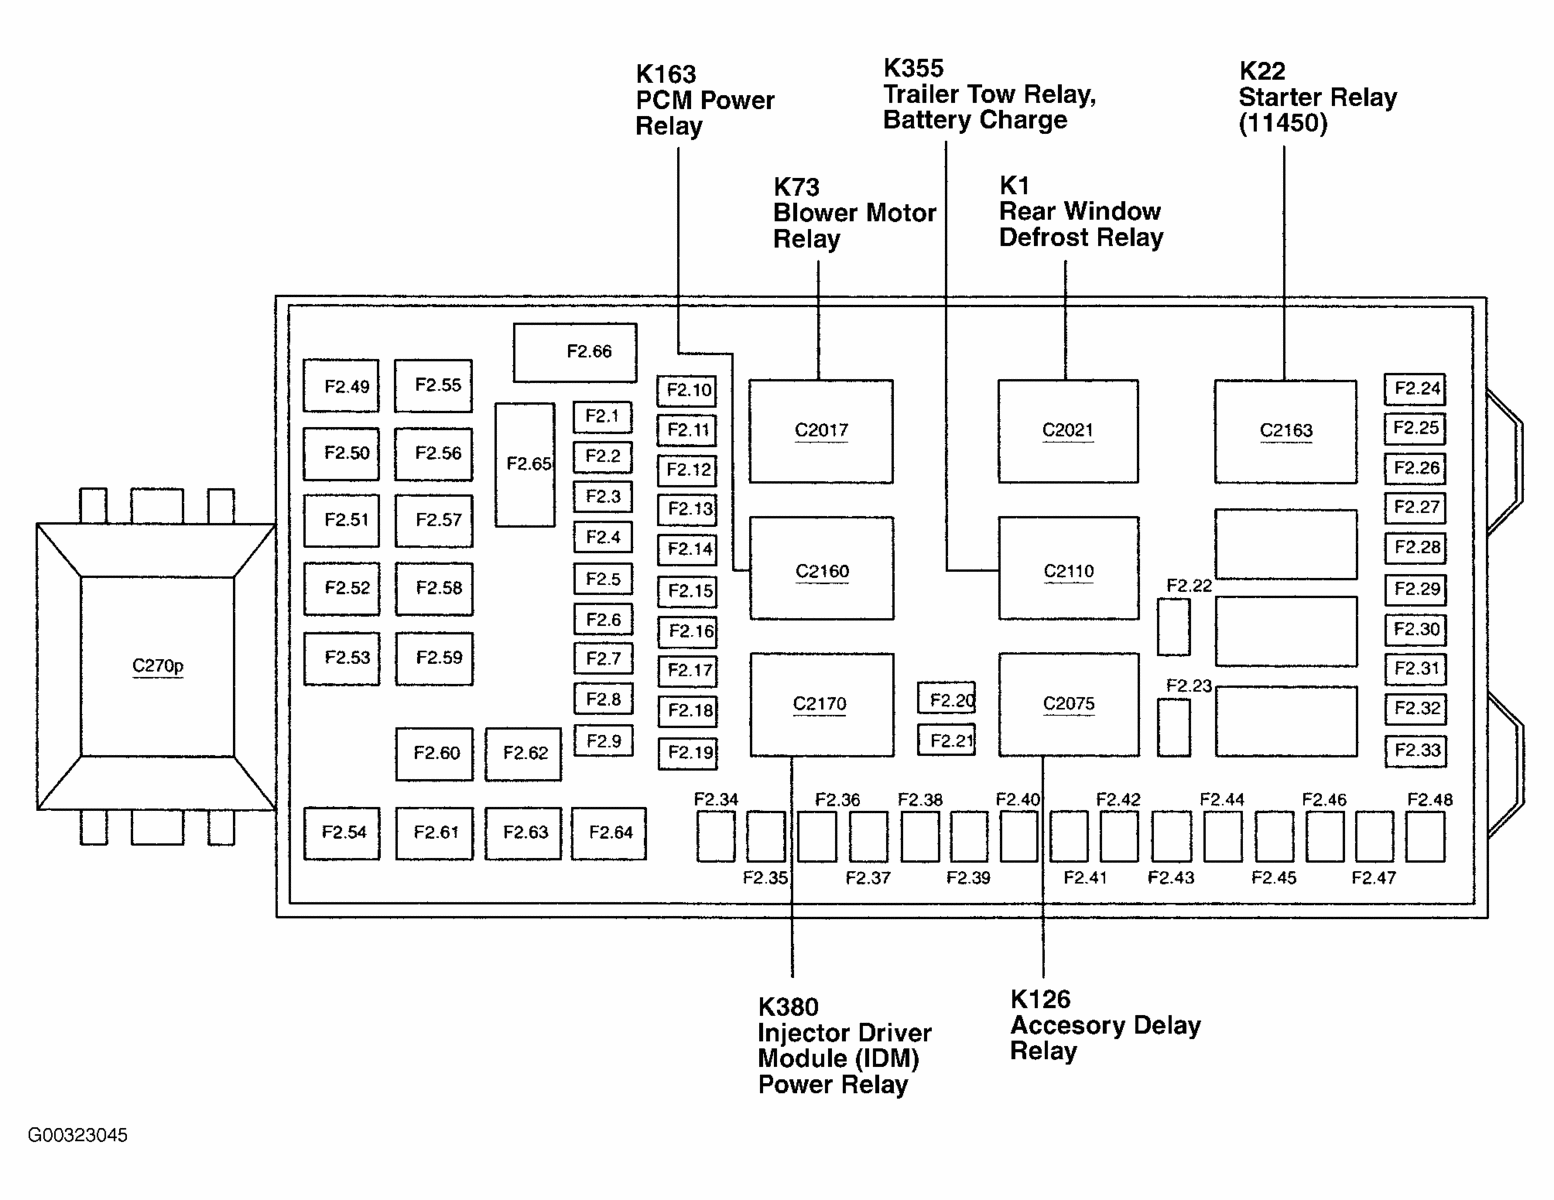 2001 Ford F250 Super Duty Wiring Diagram from static.cargurus.com